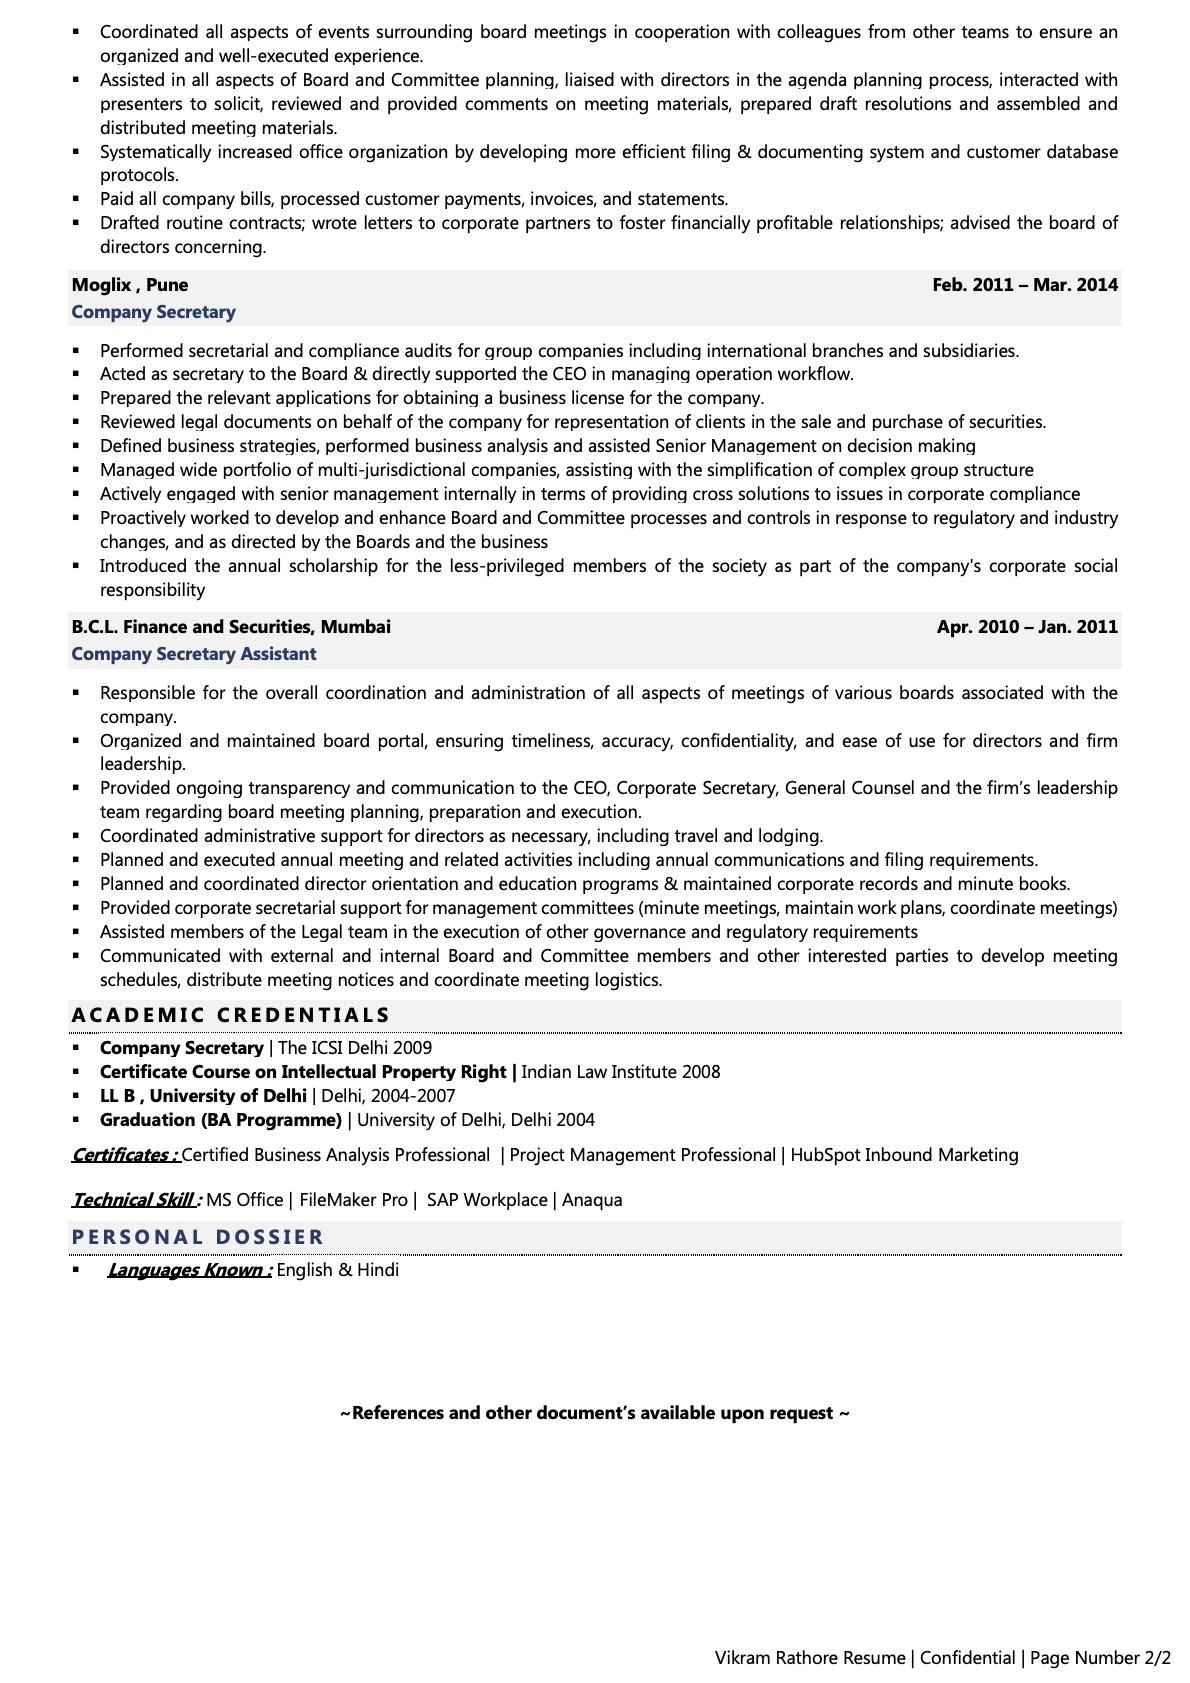 Company Secretary - Resume Example & Template